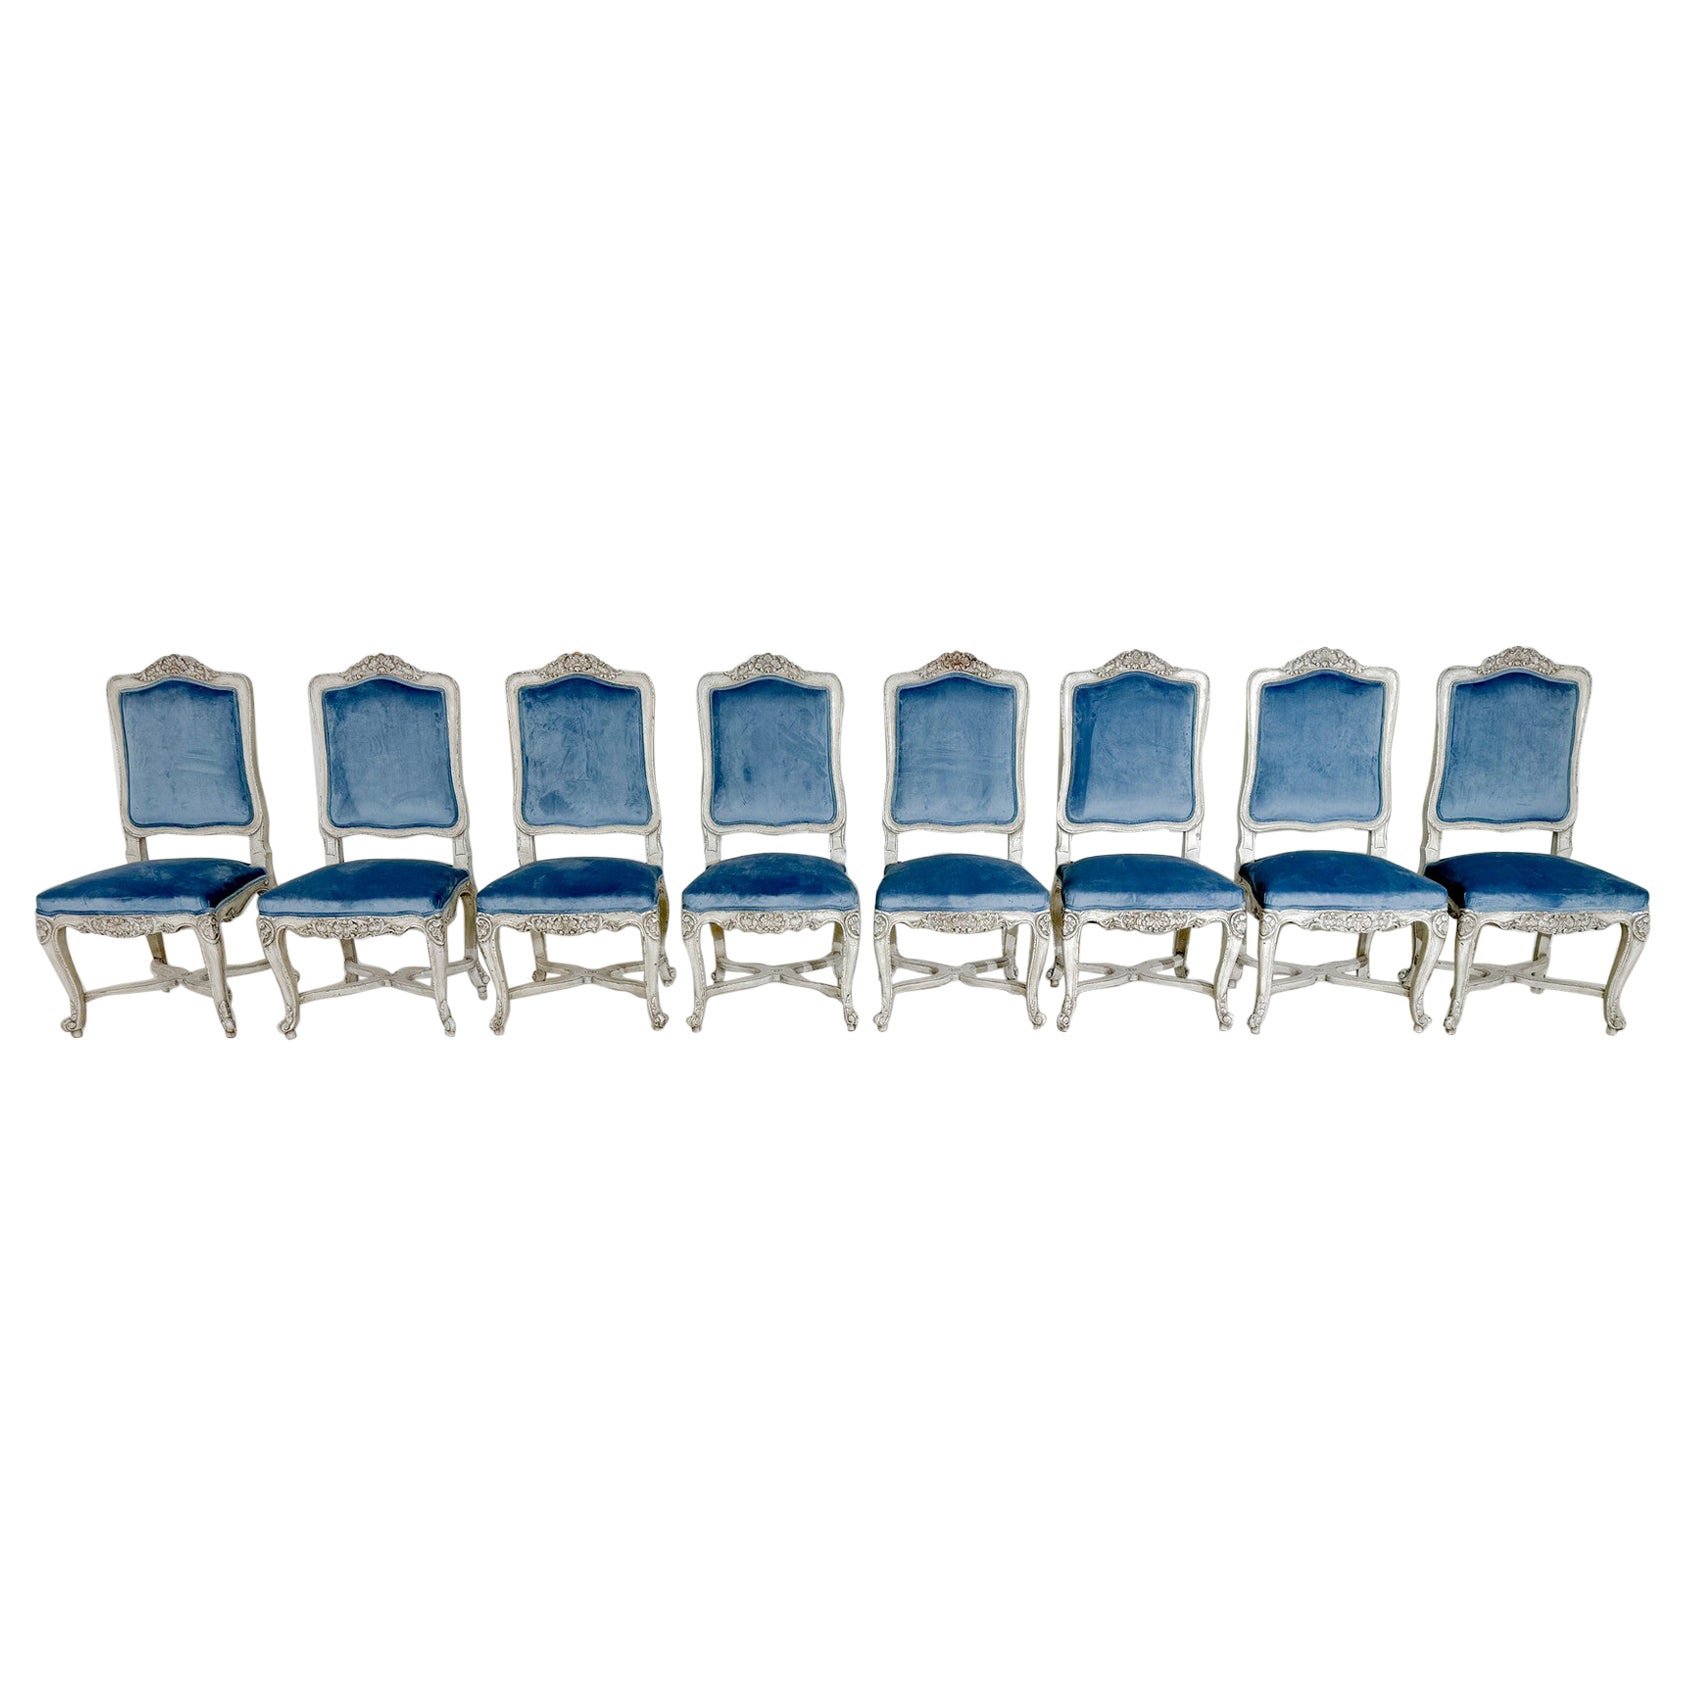 Set of 8 Regency Style Chairs, Light Blue Velvet and Wood, Belgium, 2000s For Sale